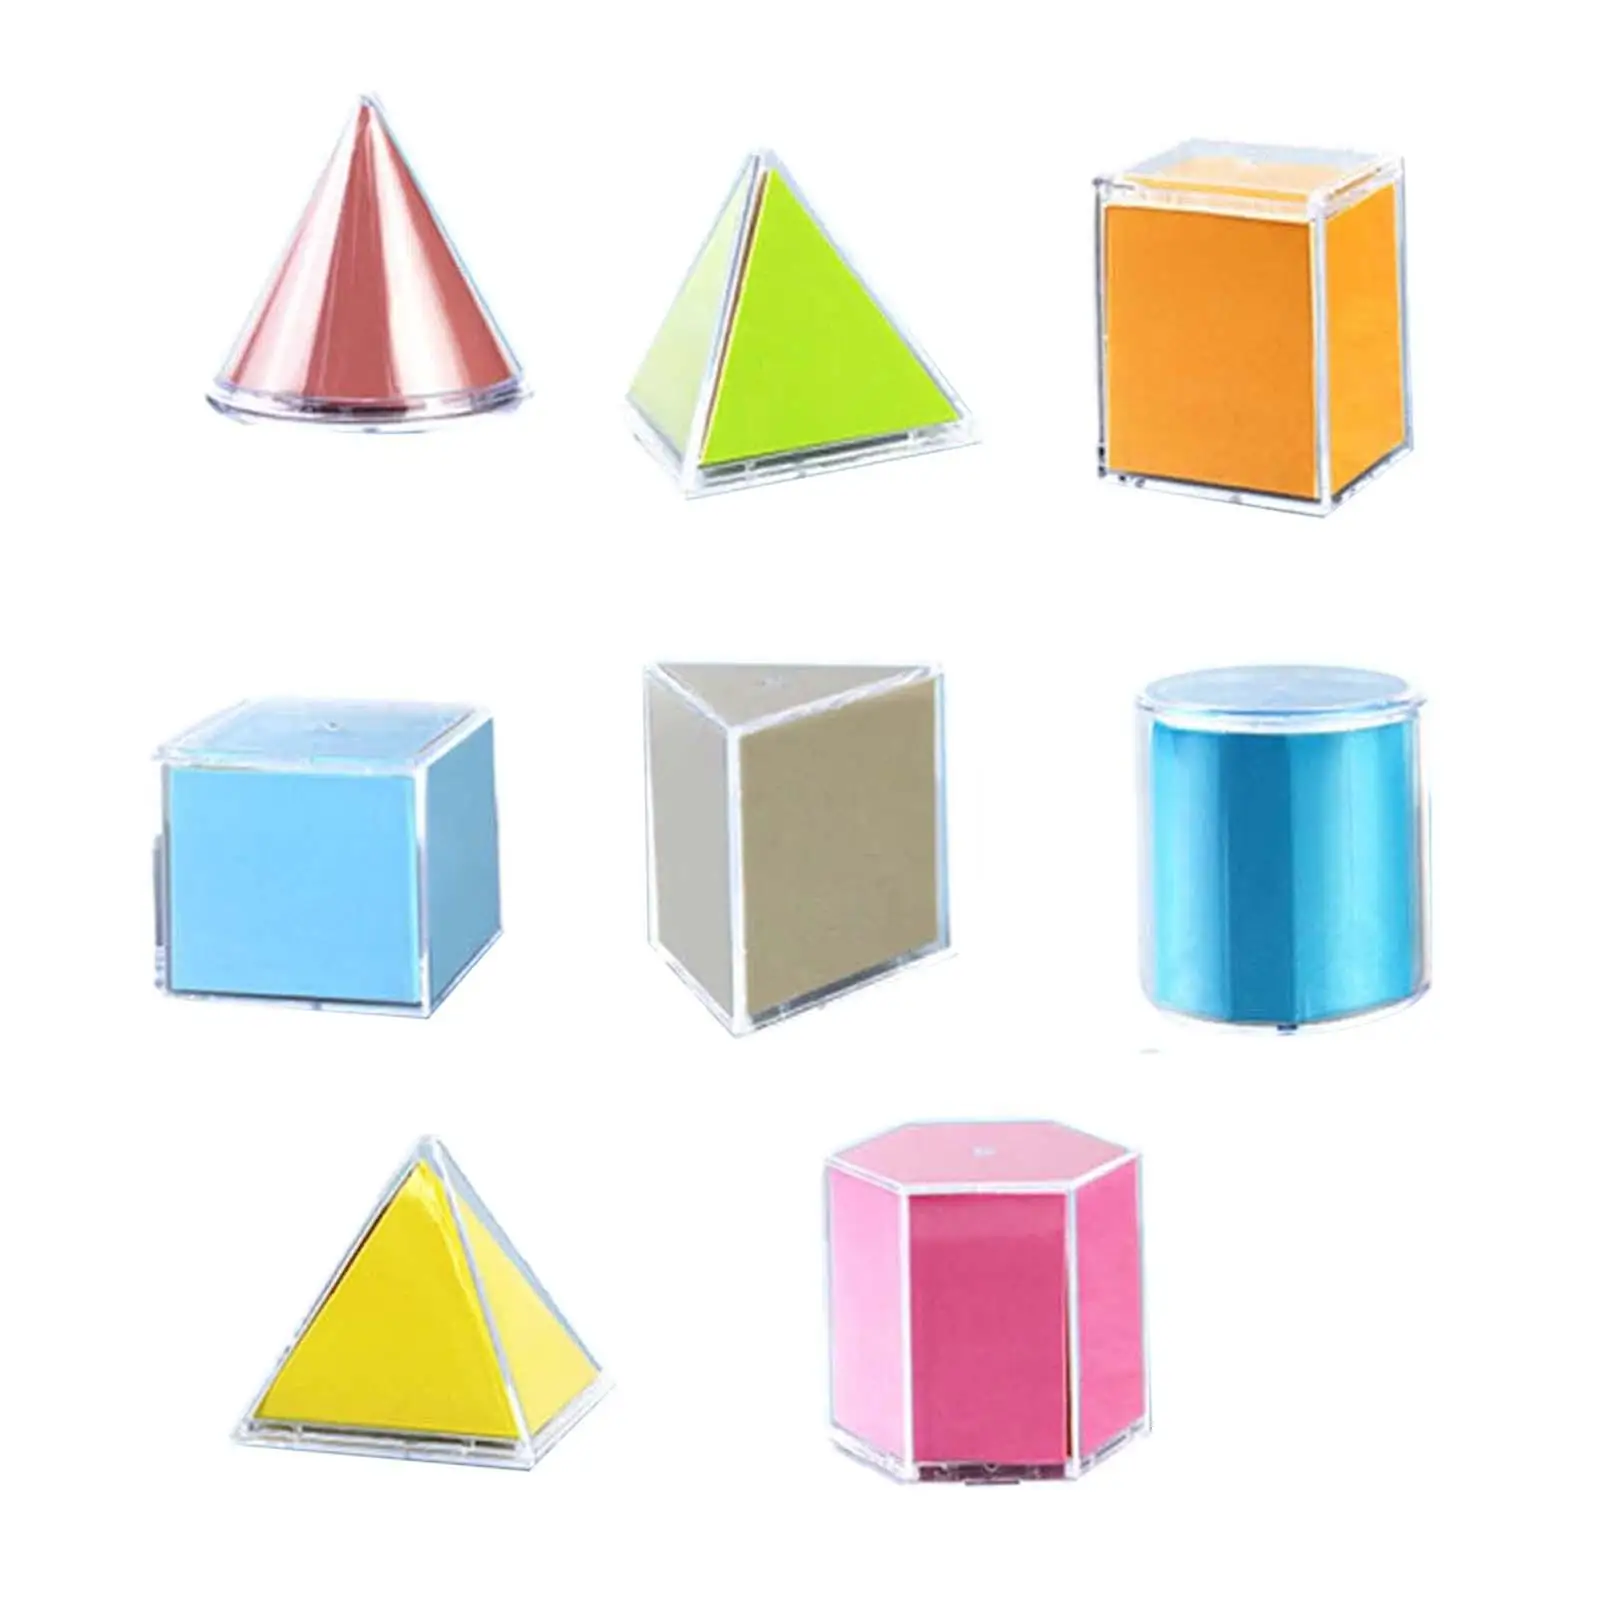 8 Pieces Transparent Geometric Shapes Colorful Educational Toy for Math Games Teacher Supplies Math Helper Teacher Aids Children